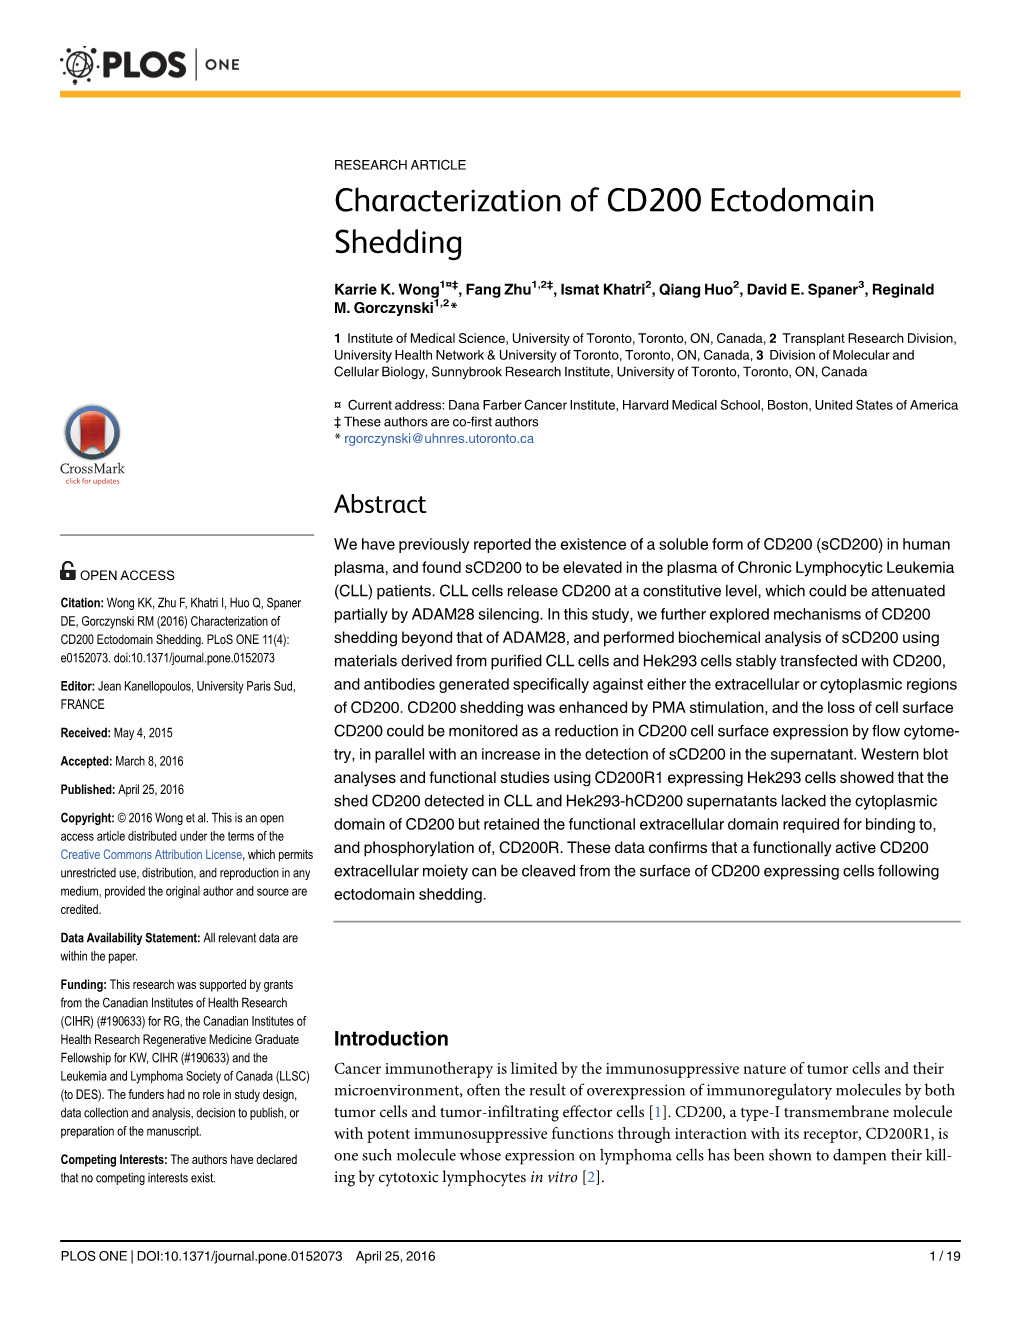 Characterization of CD200 Ectodomain Shedding